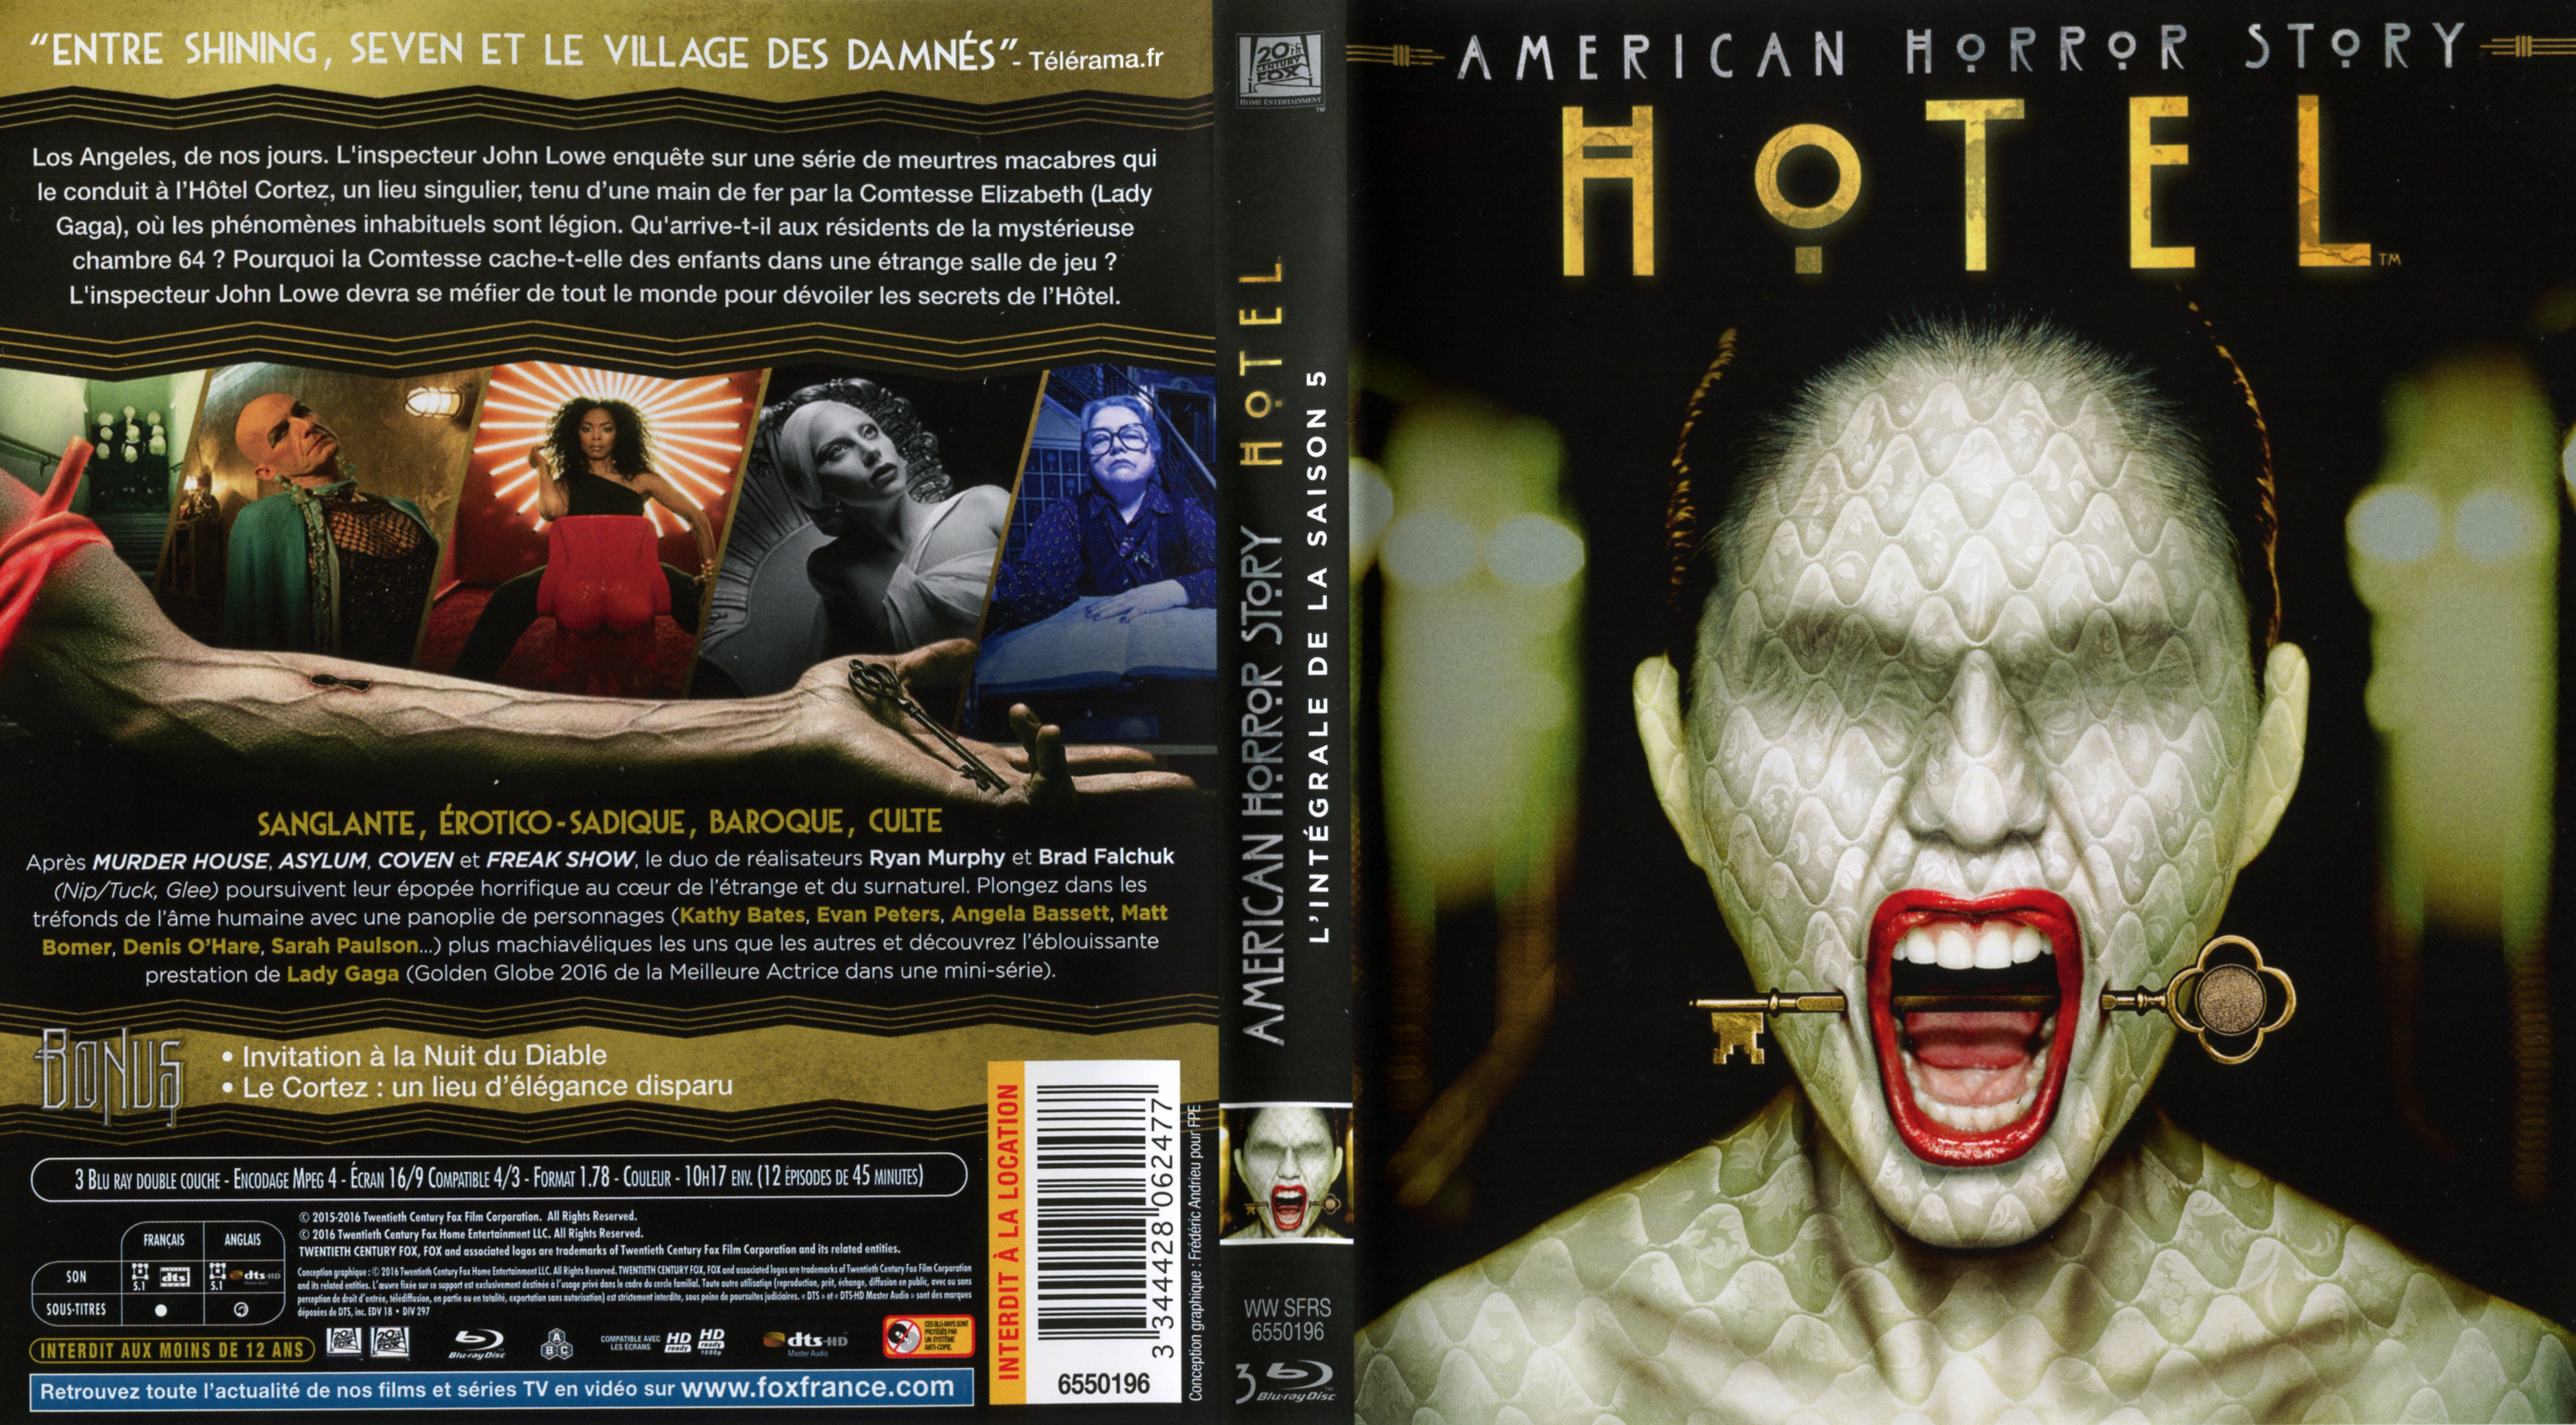 Jaquette DVD American horror story Saison 5 COFFRET (BLU-RAY)